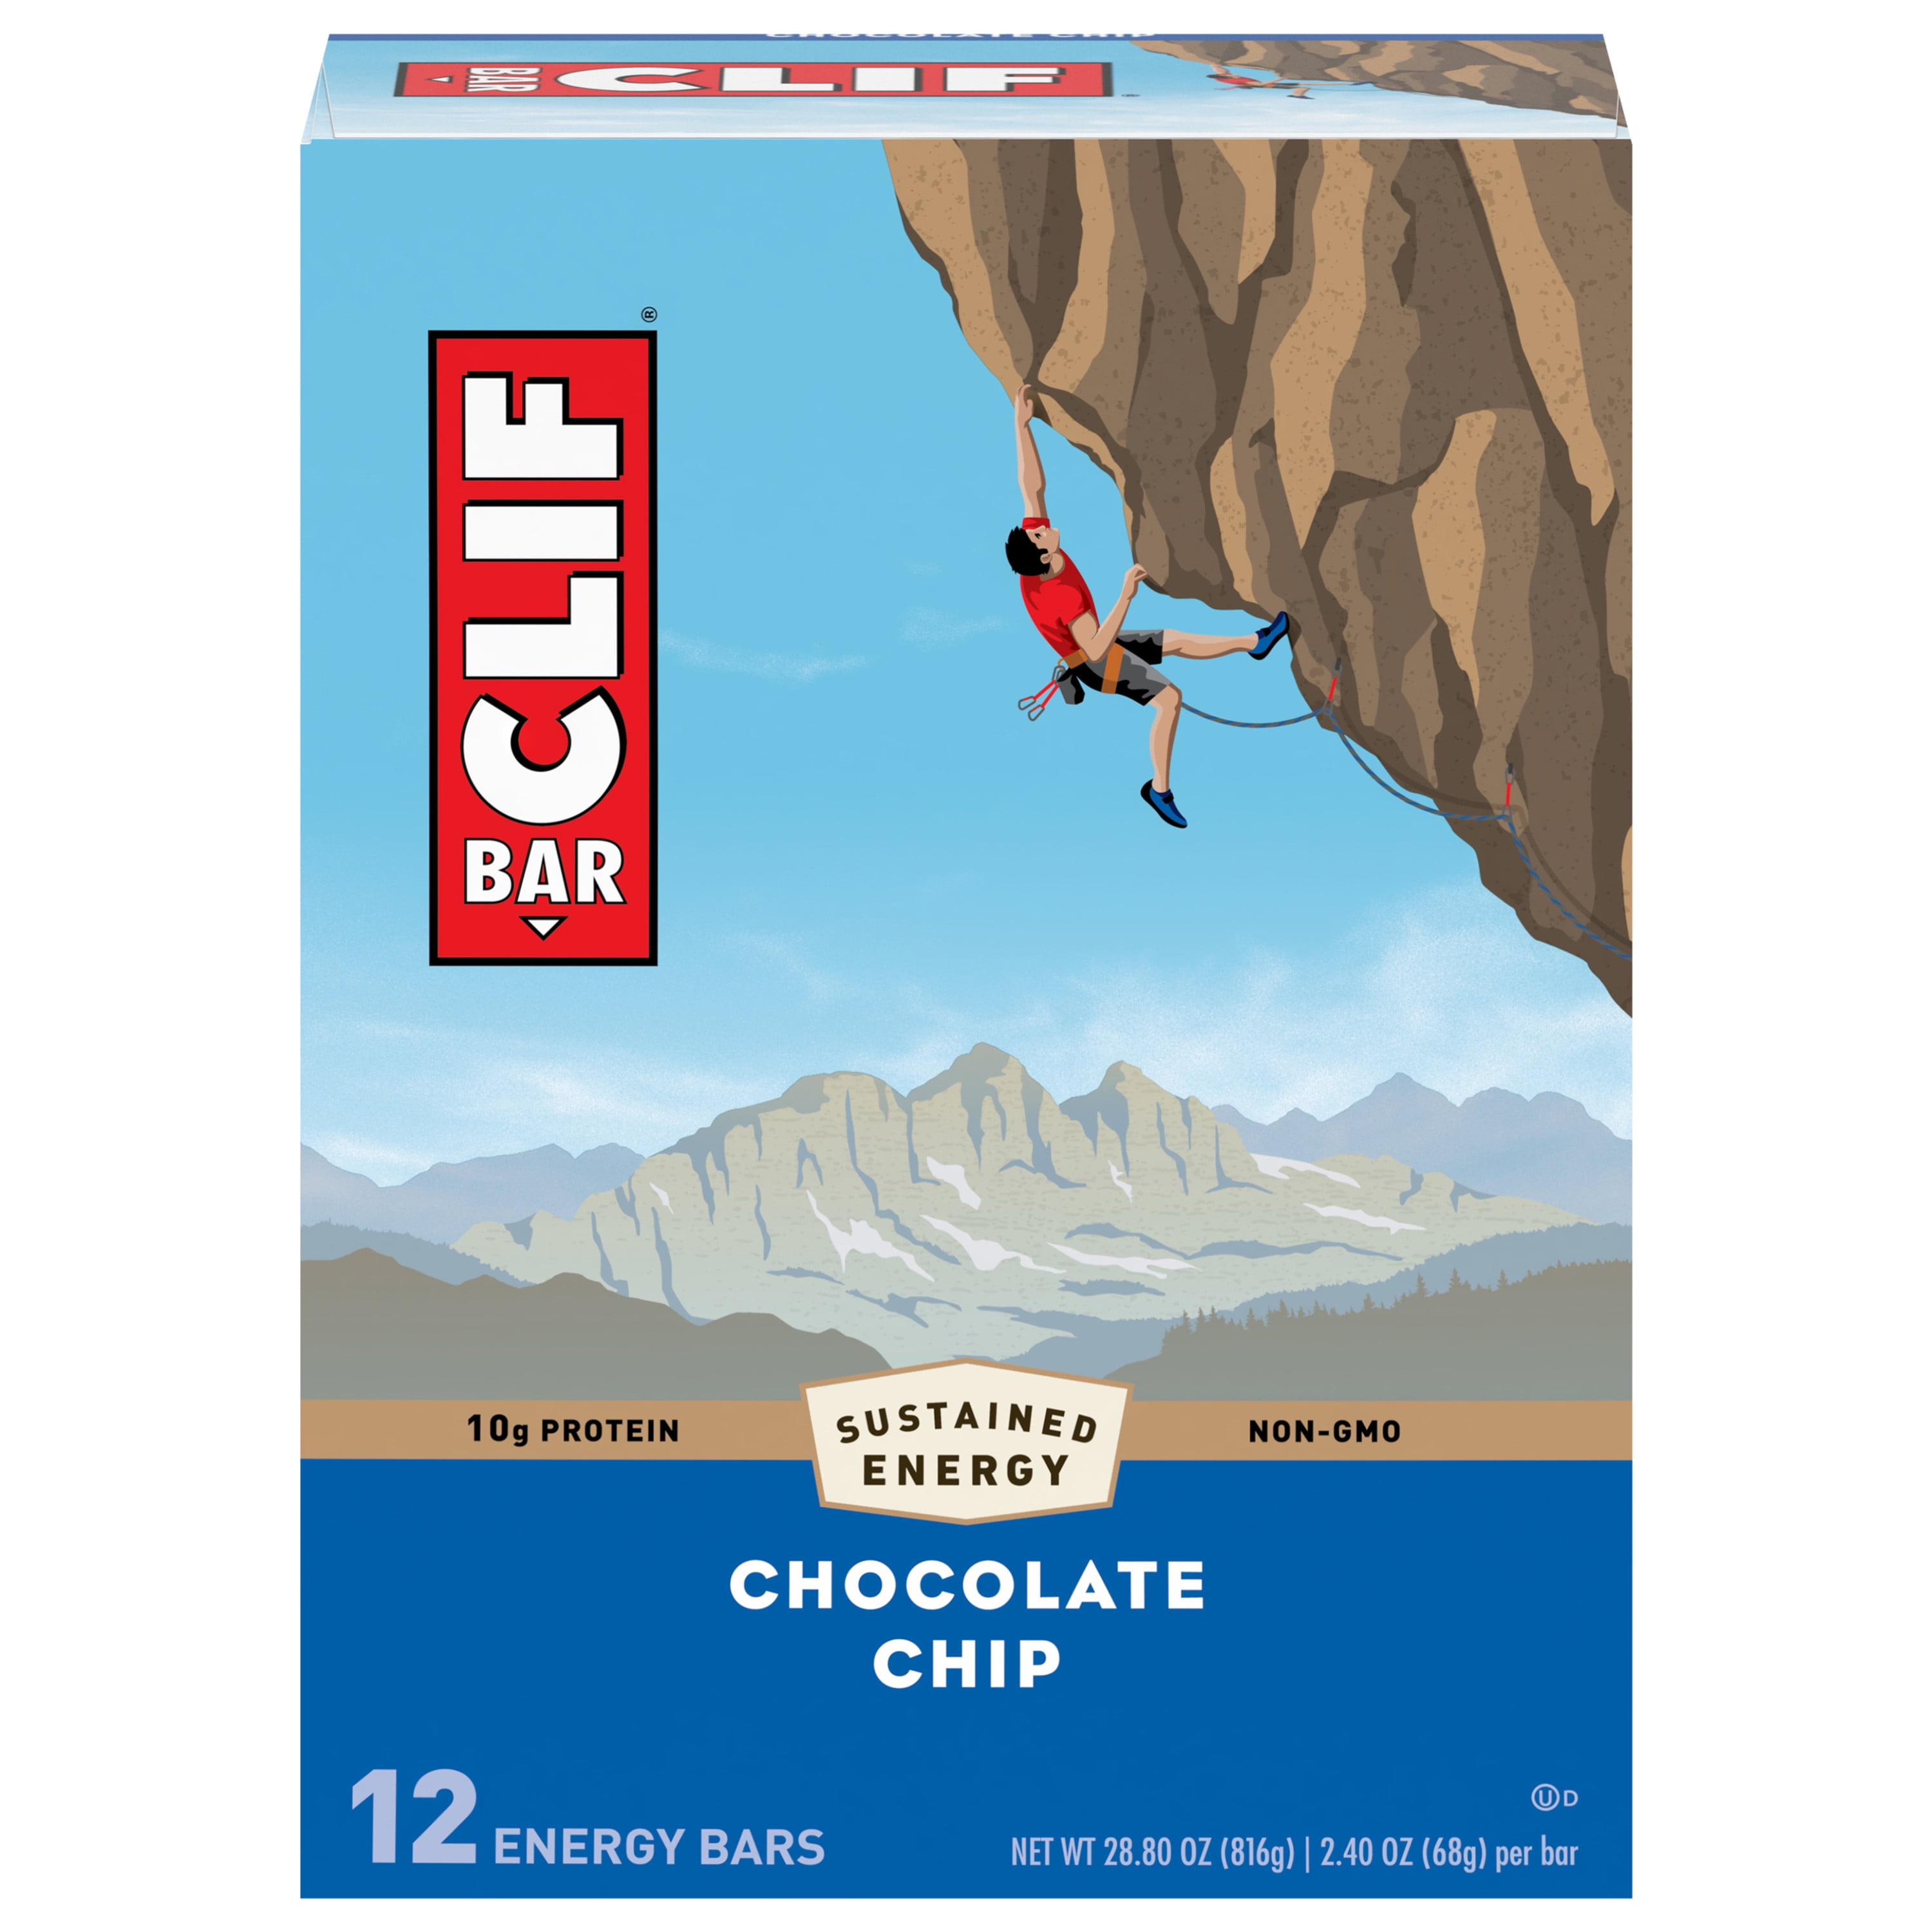 Clif Bar Energy Bars, Chocolate Chip, 10g Protein Bar, 12 Ct, 2.4 oz